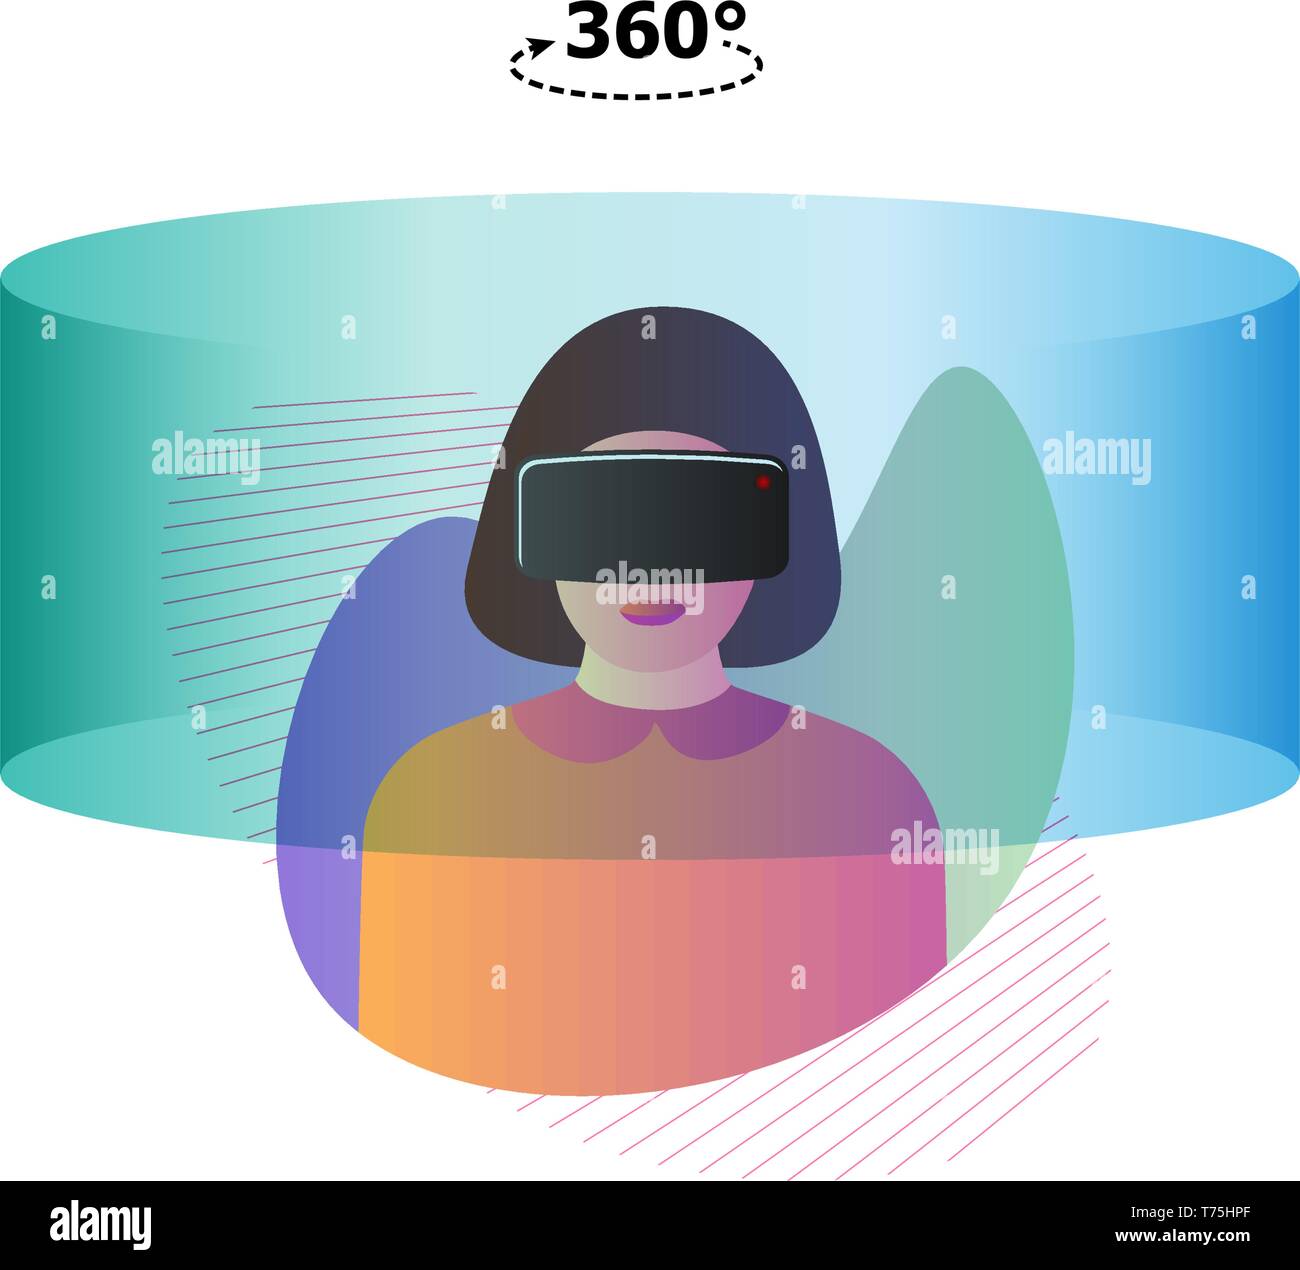 Frauen tragen virtual reality Headset Gläser. Vr-Welt design Vorlage. Zukunft Innovation Technologie Vektor moderne Abbildung Stock Vektor